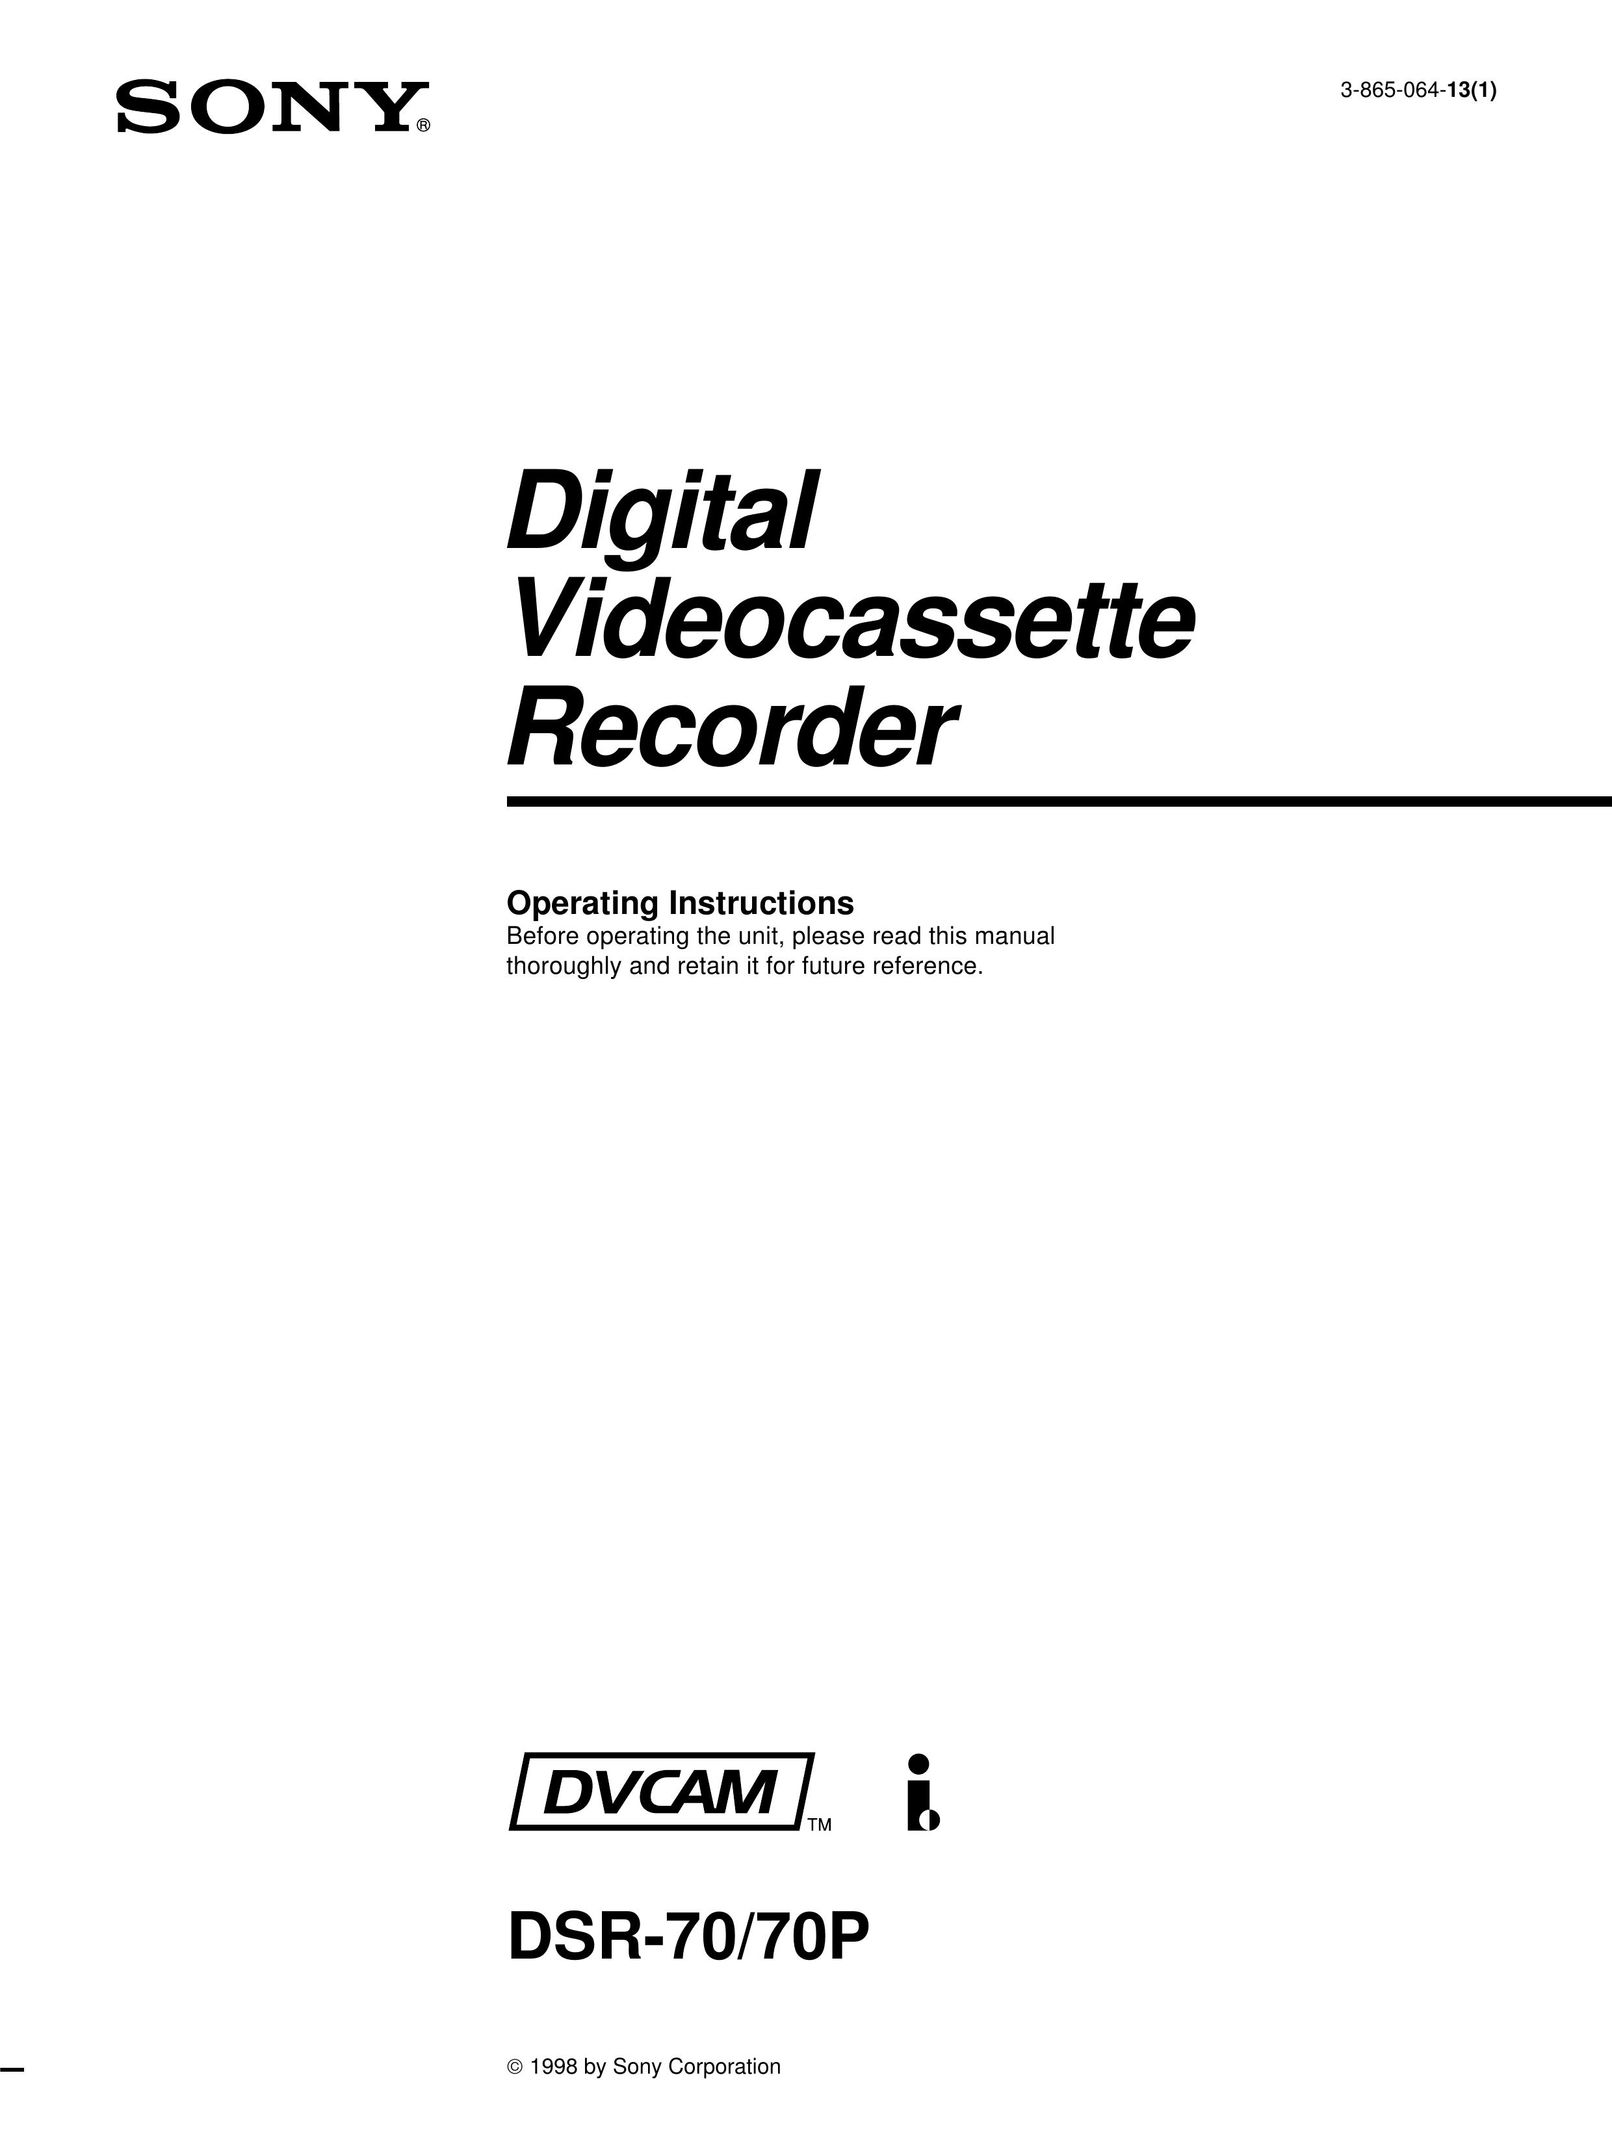 Sony DSR-70P DVD Recorder User Manual